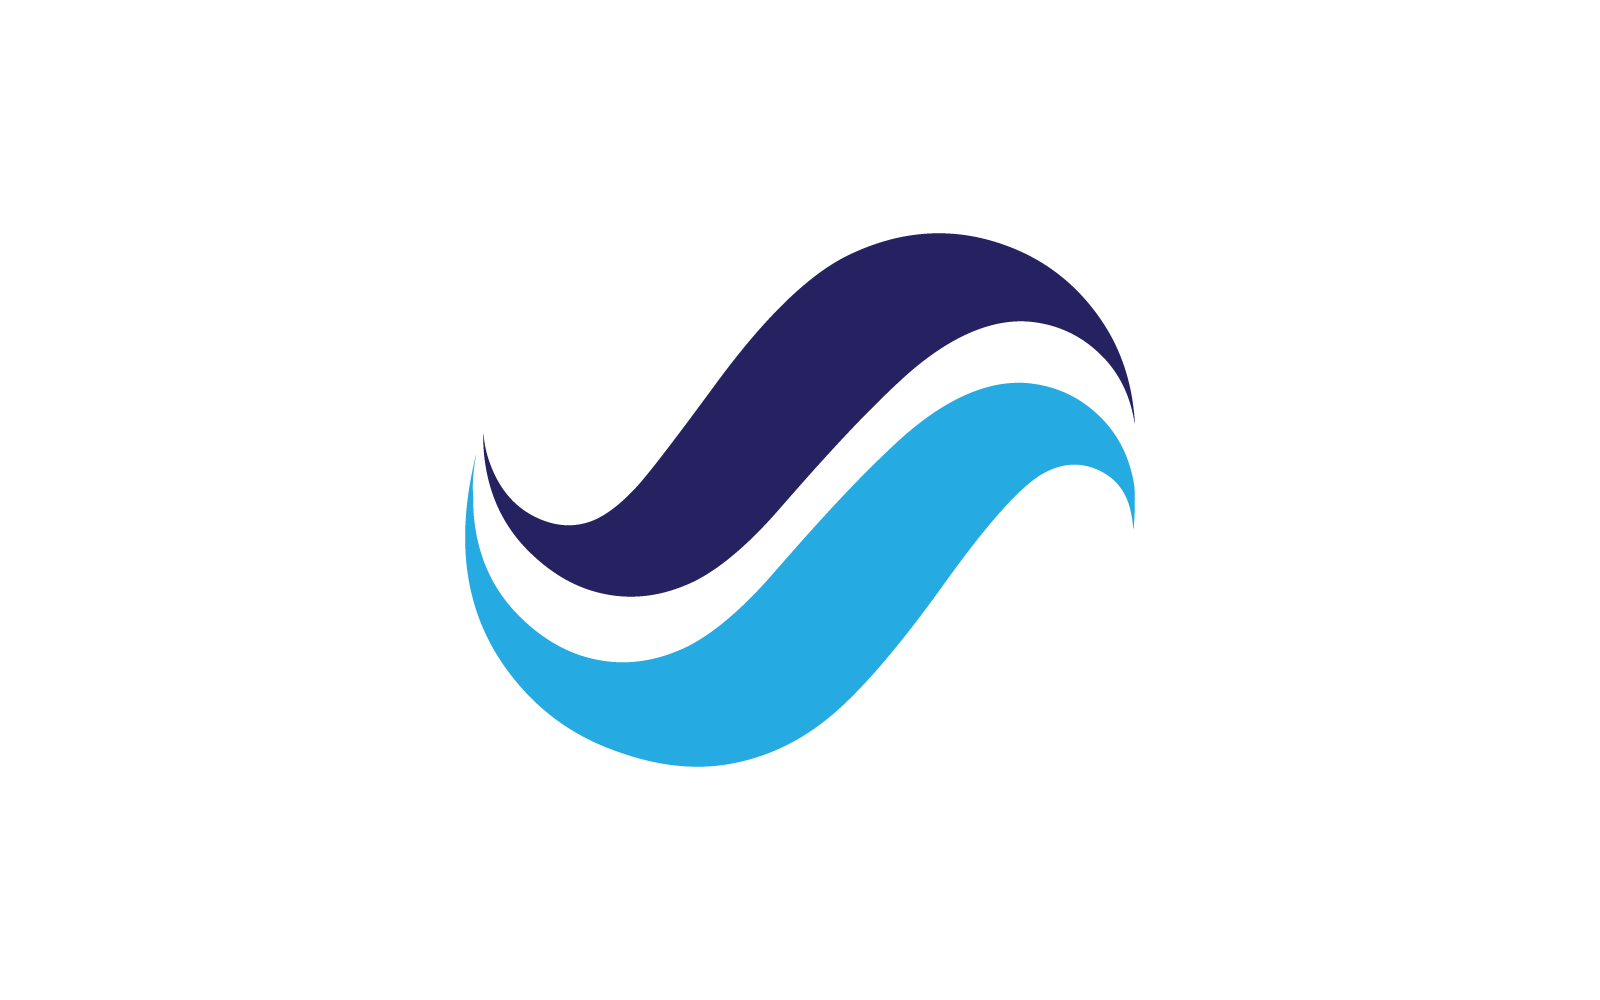 Water Wave logo vector template design